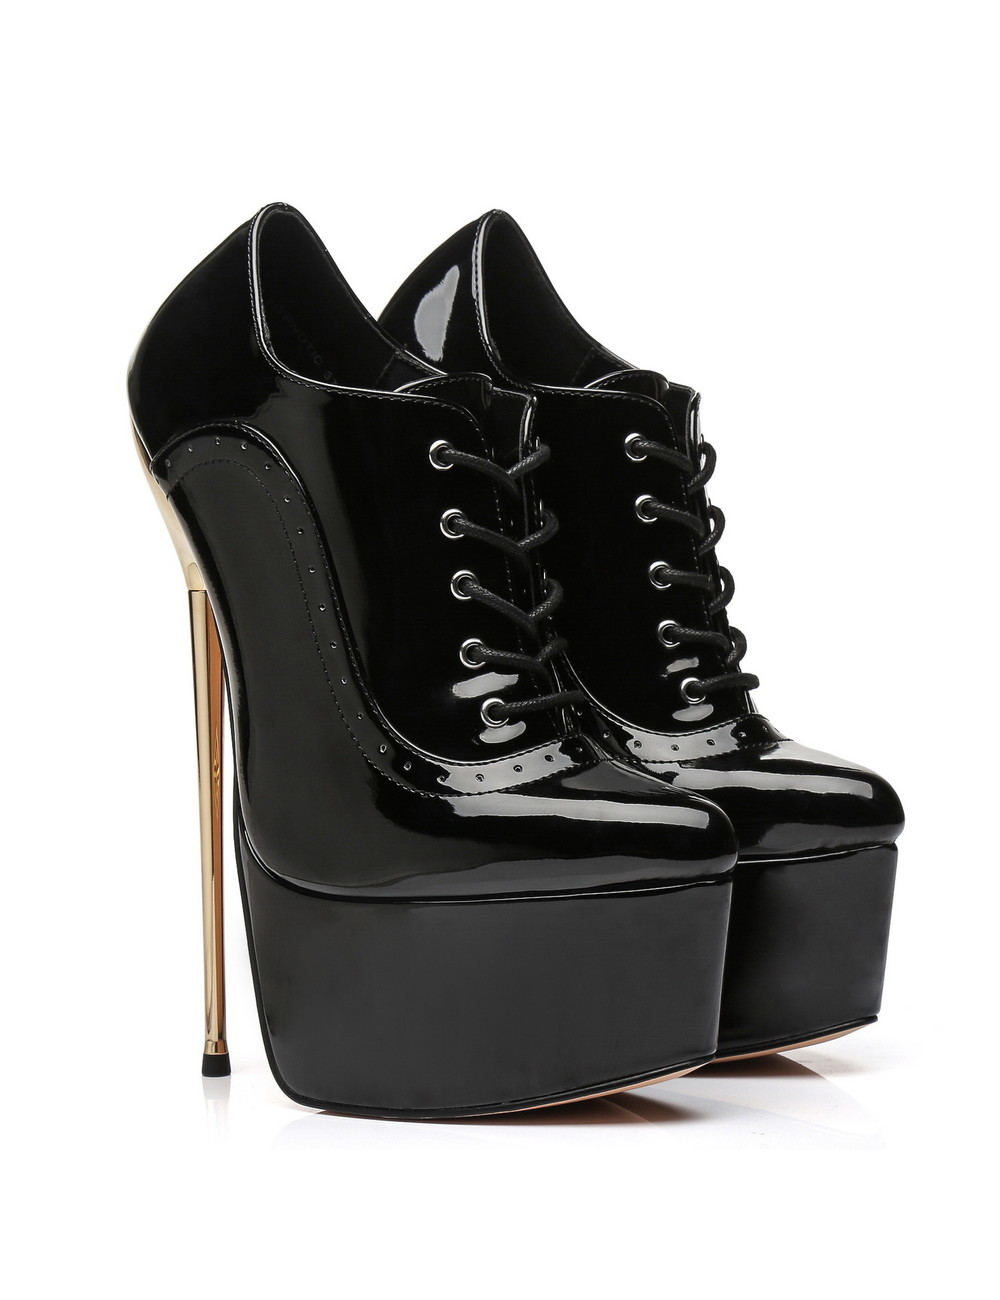 Black Shiny Giaro platform oxford pumps gold heeled 20cm - Shoebidoo ...